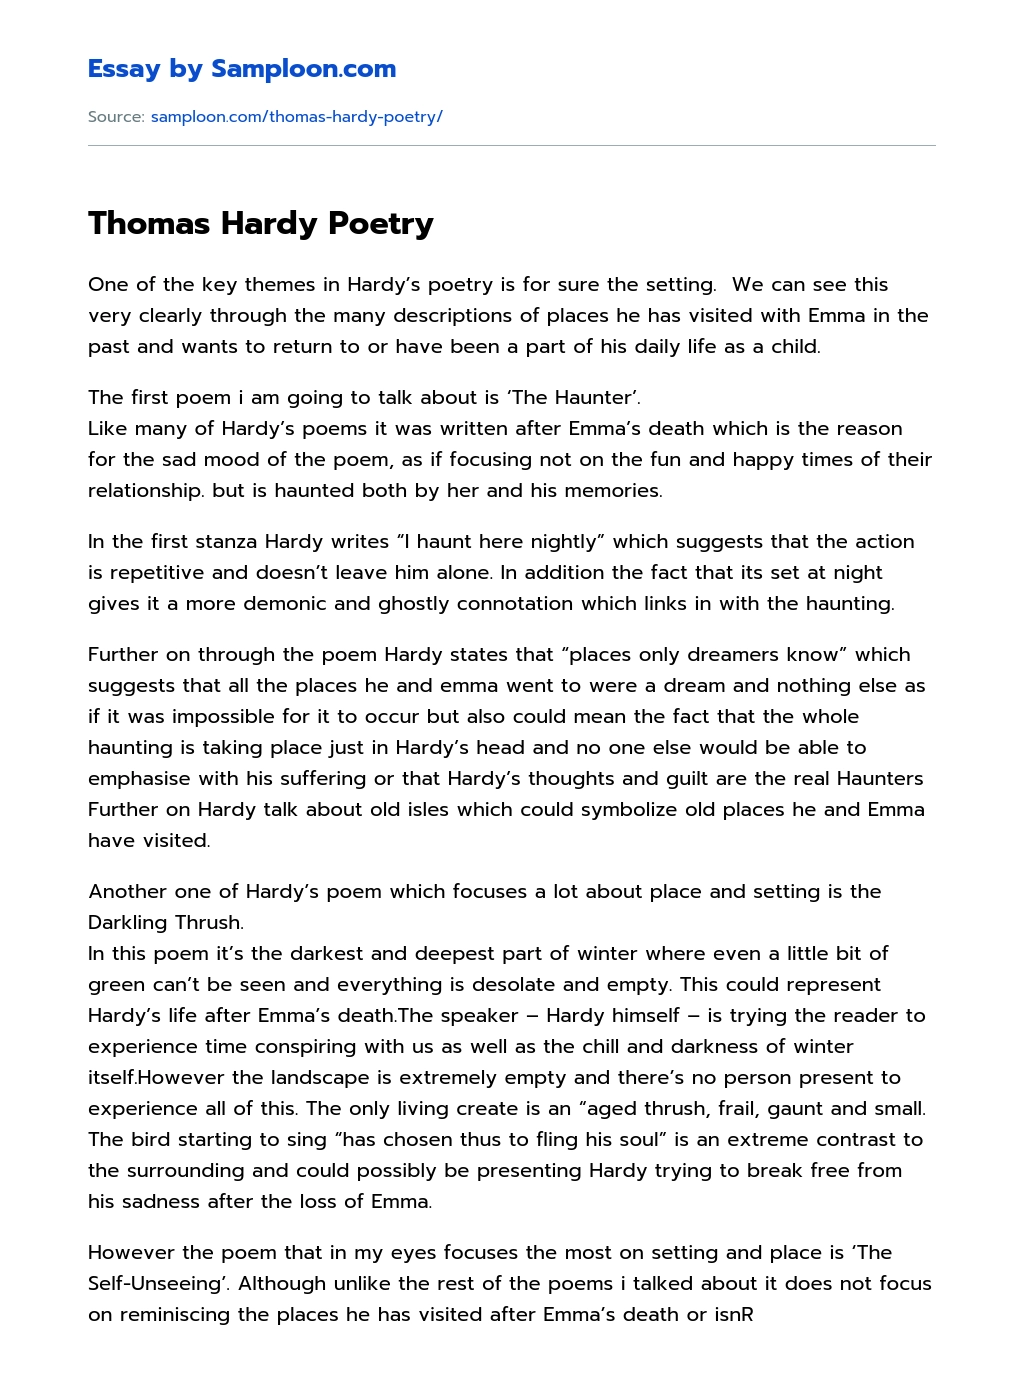 Thomas Hardy Poetry essay